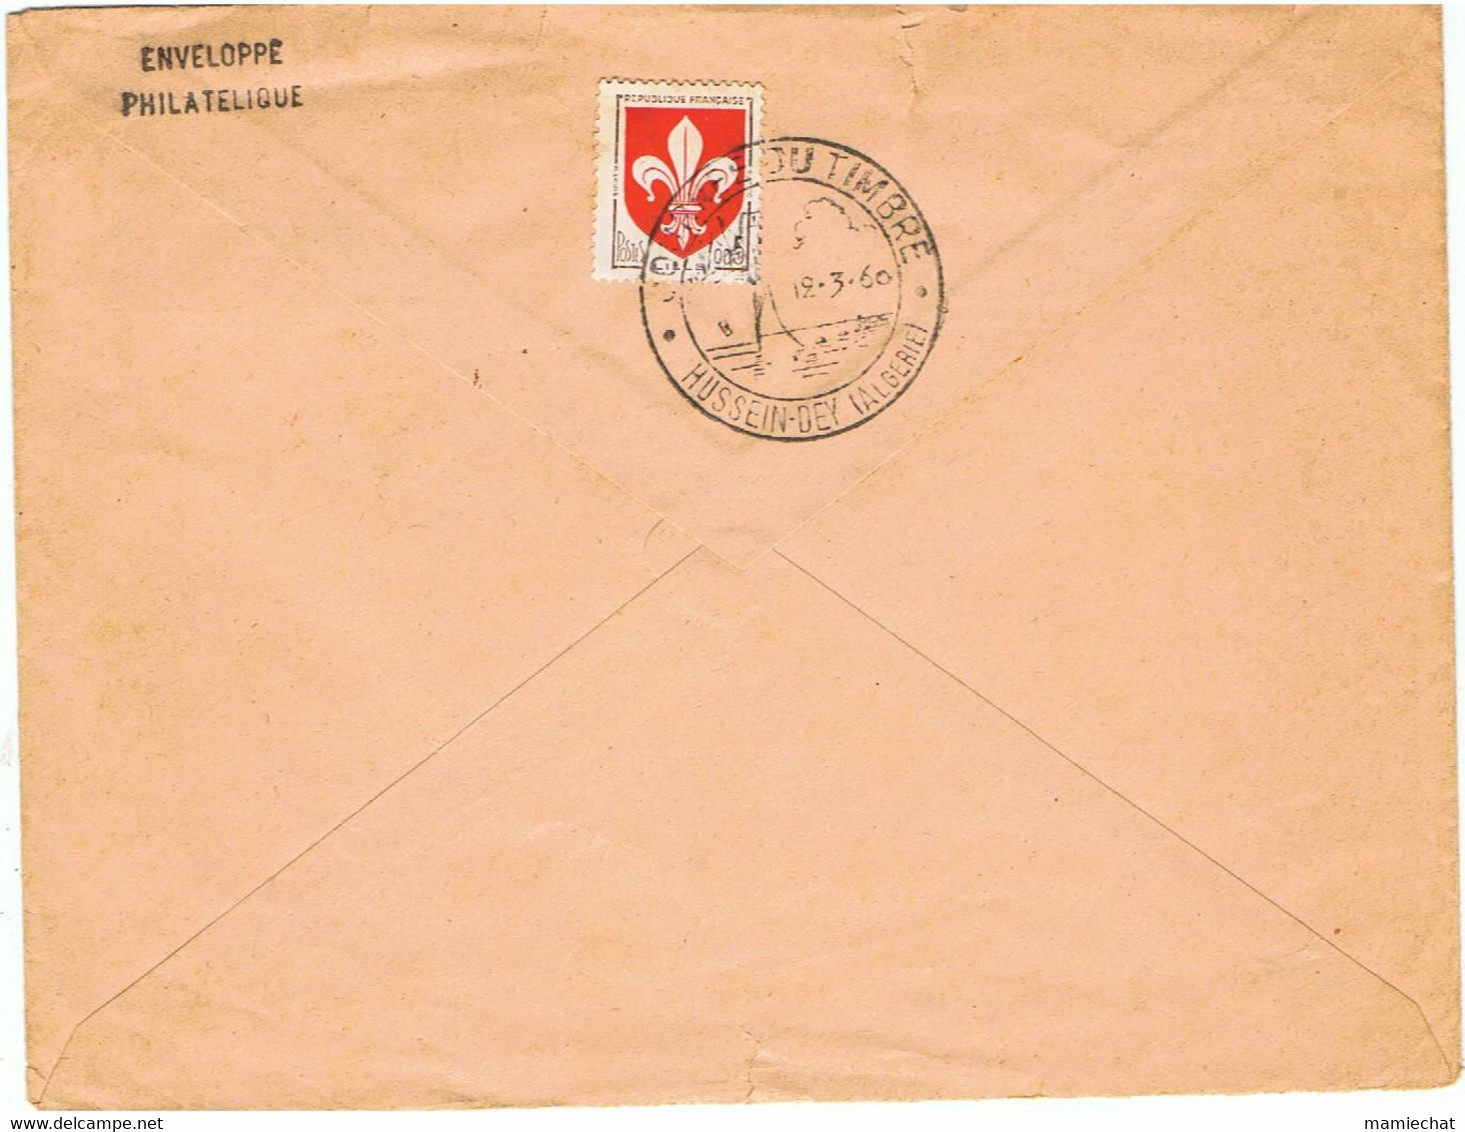 ENVELOPPE DE 1960-AMICALE PHILATELIQUE-HUSSEIN-DEY-2 SCANS- - Briefe U. Dokumente